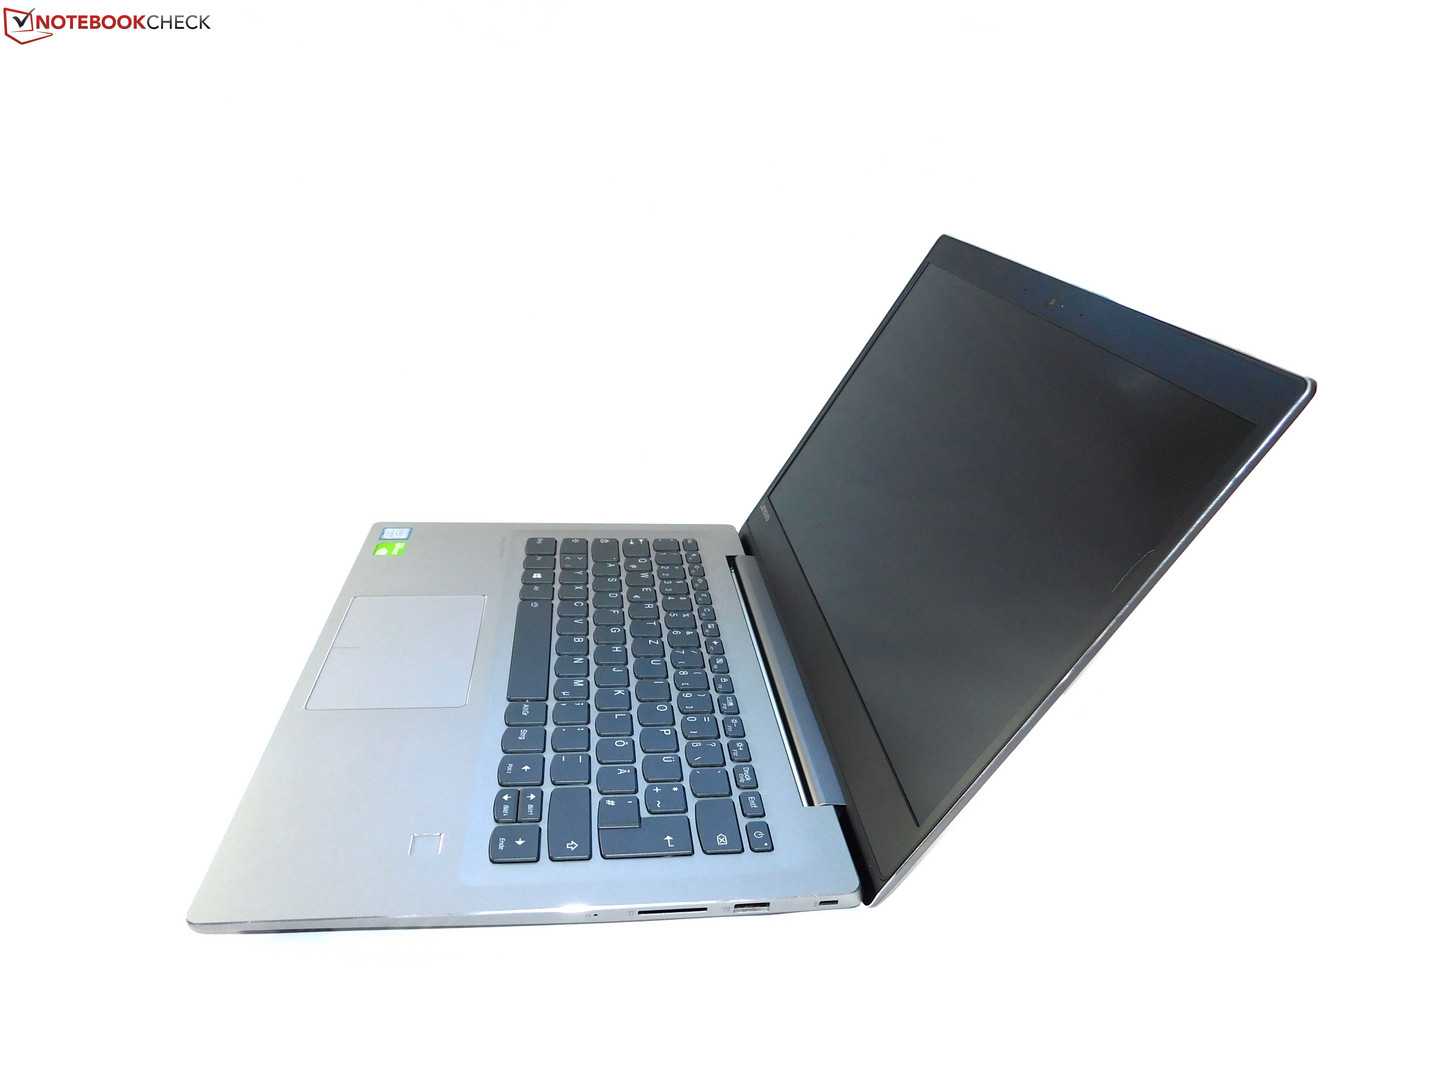 Ноутбук lenovo ideapad 520s-14ikb (80x2000xrk) — купить, цена и характеристики, отзывы